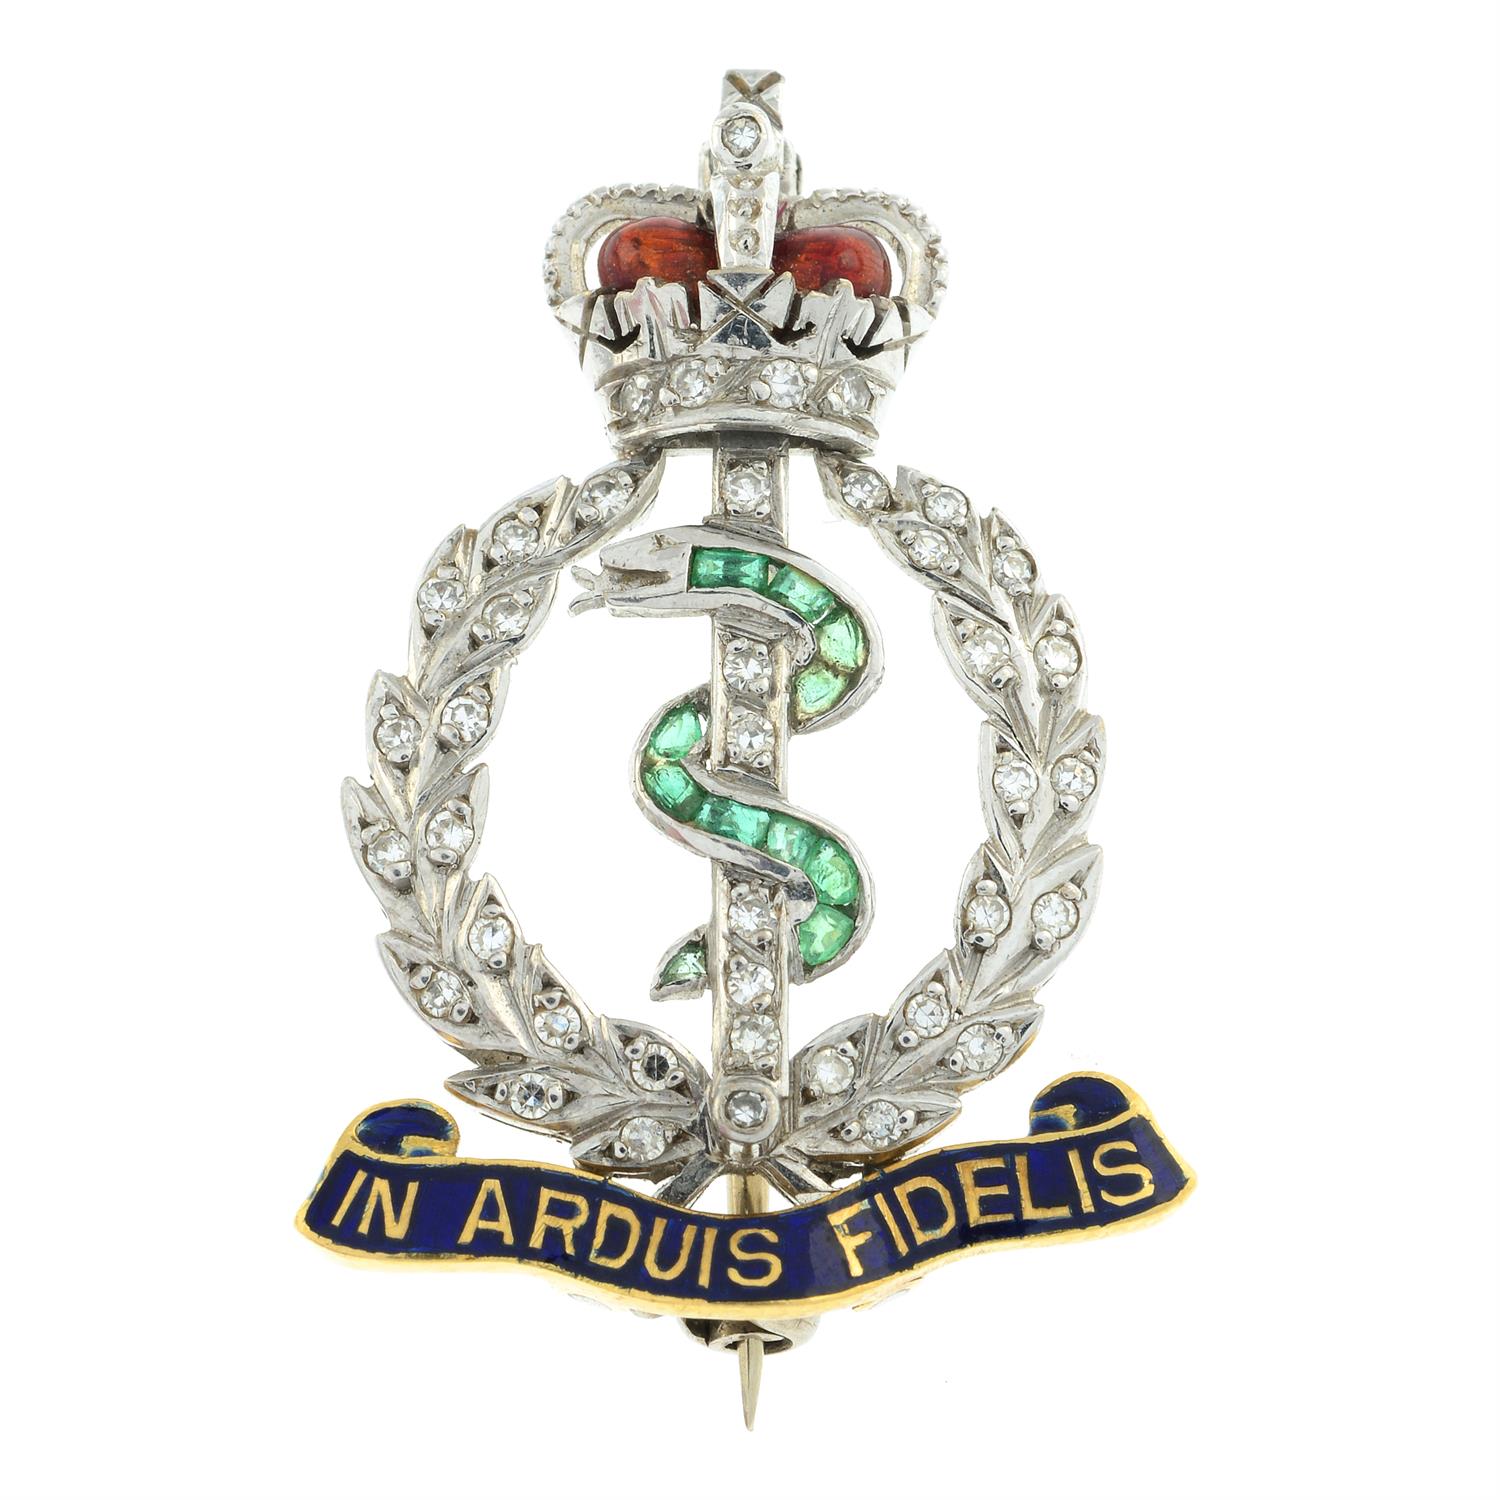 Diamond, emerald & enamel Royal Army Medical Corps brooch